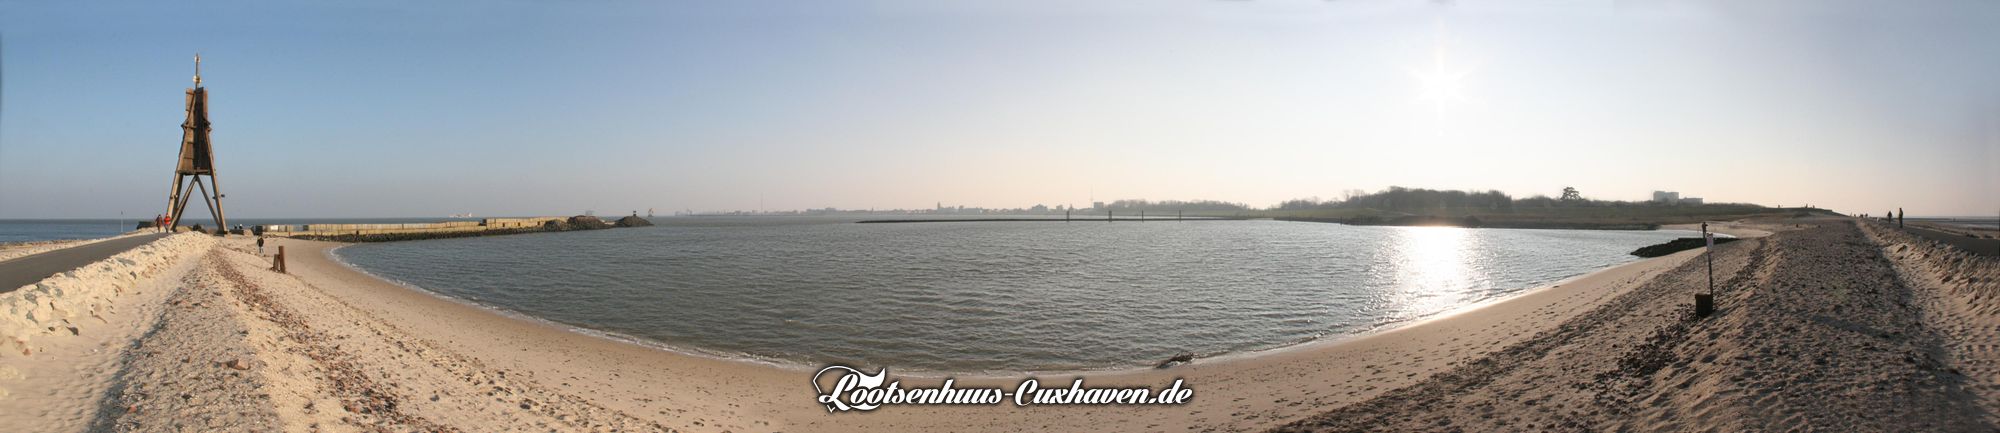 Cuxhaven Kugelbake Panorama